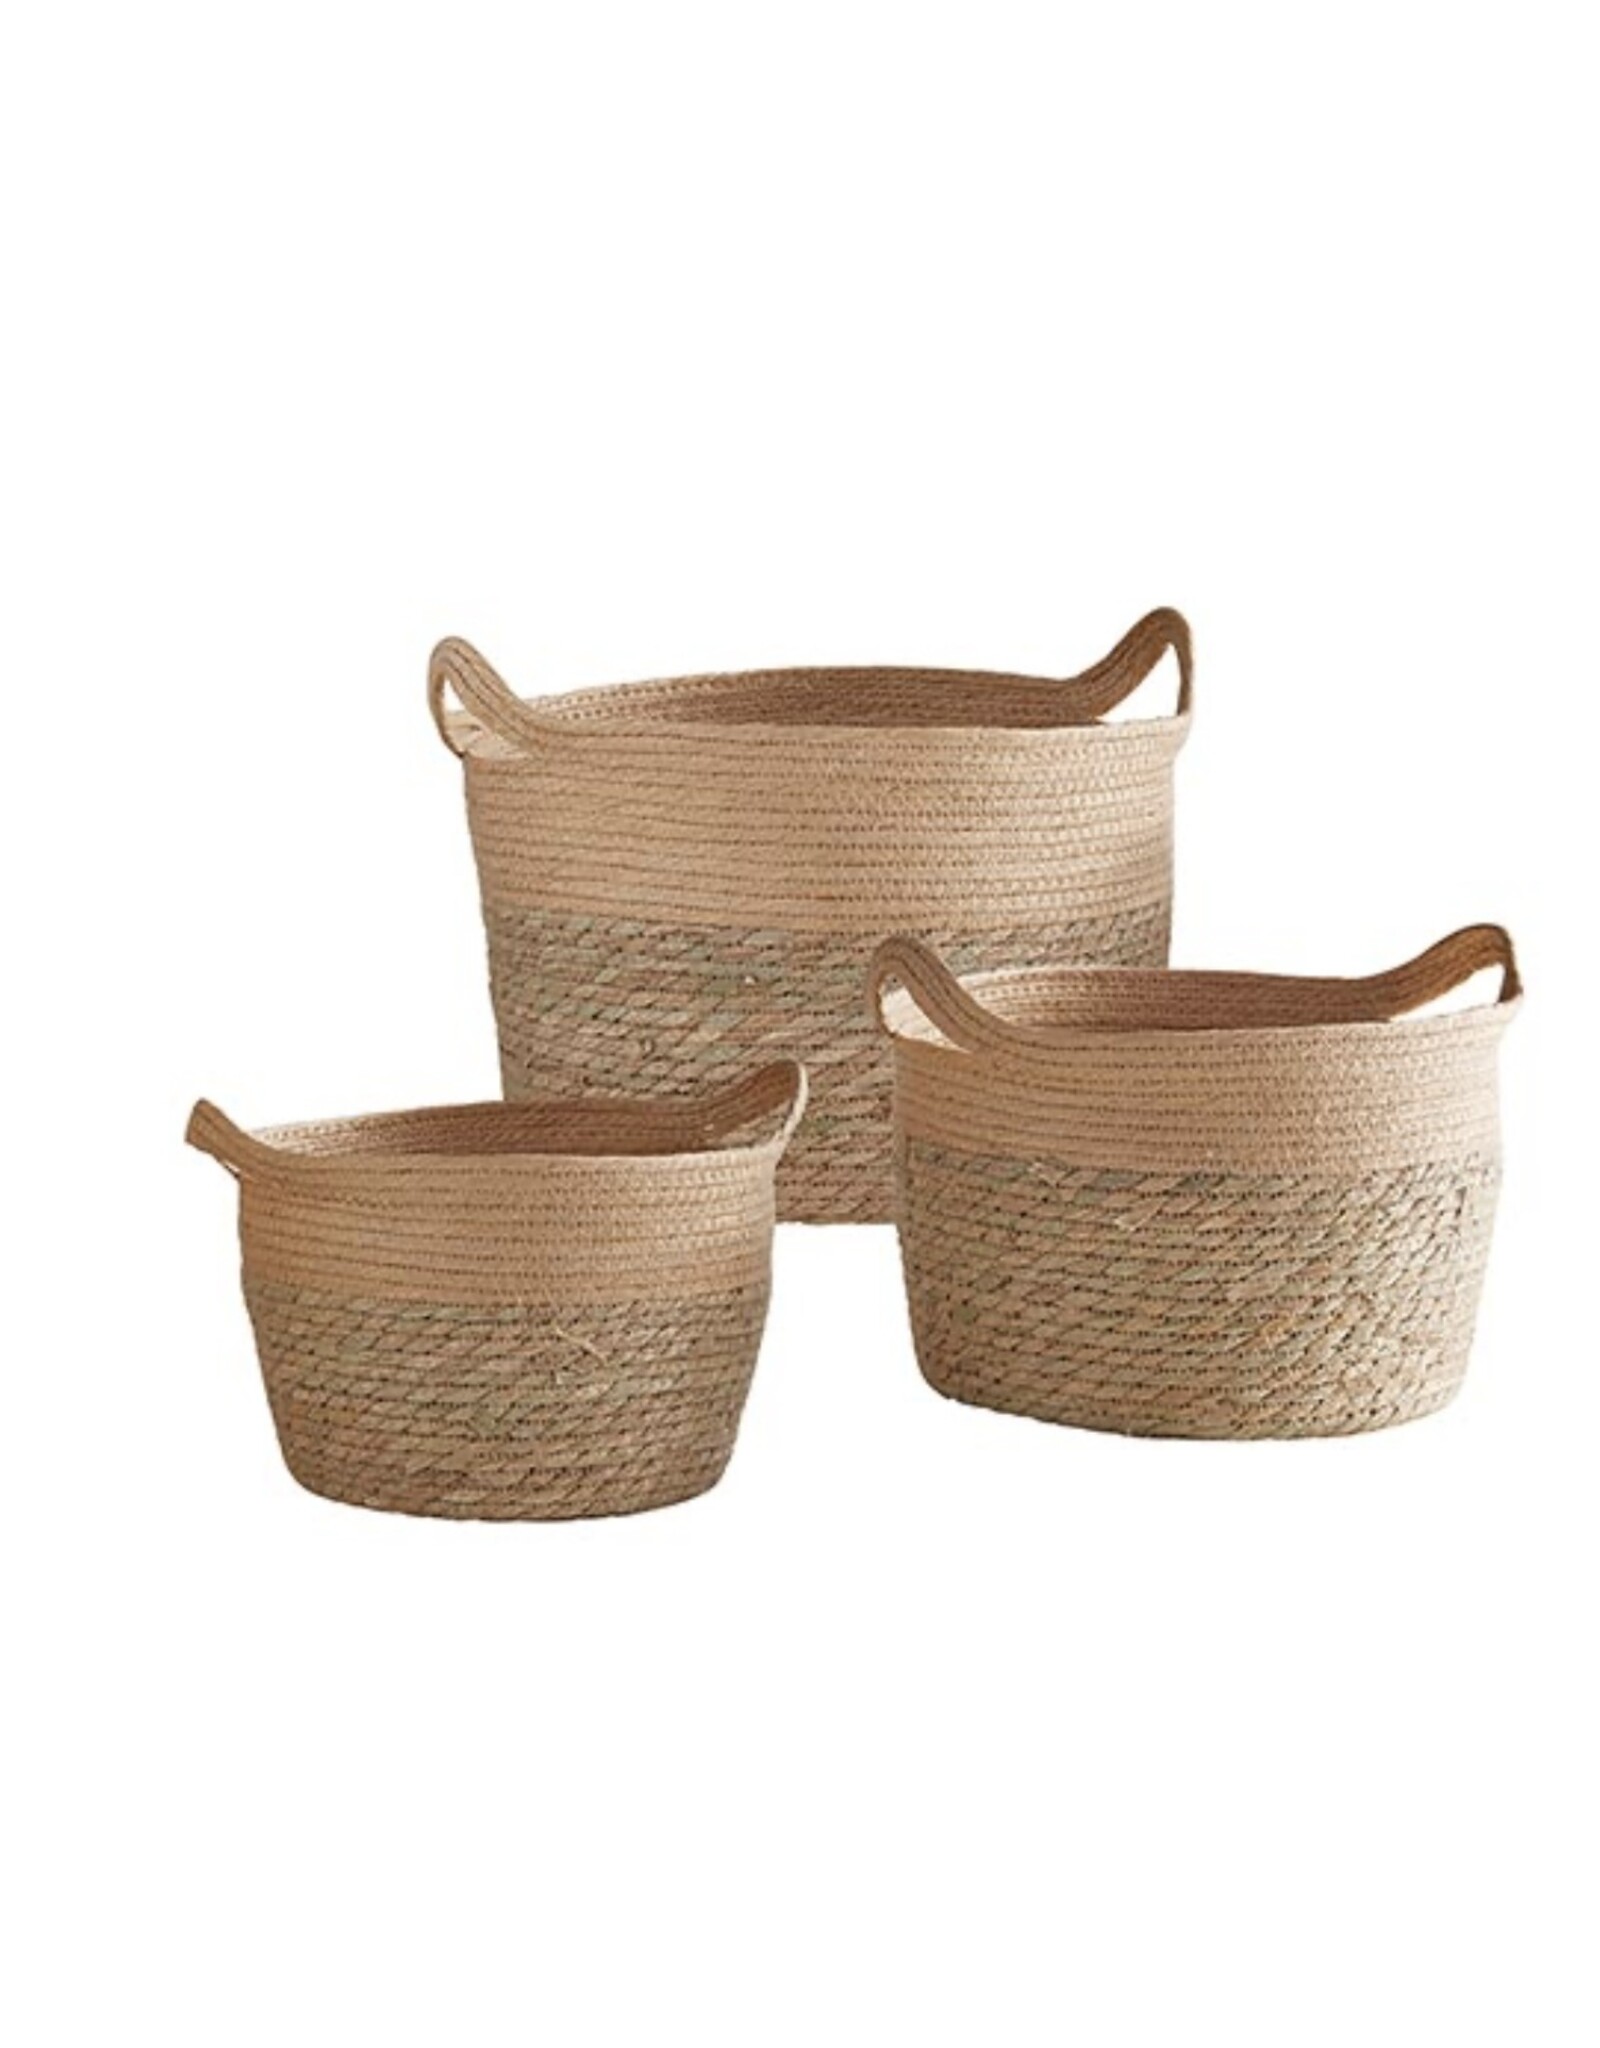 Santa Barbara Design Studio Tan Seagrass Basket Small